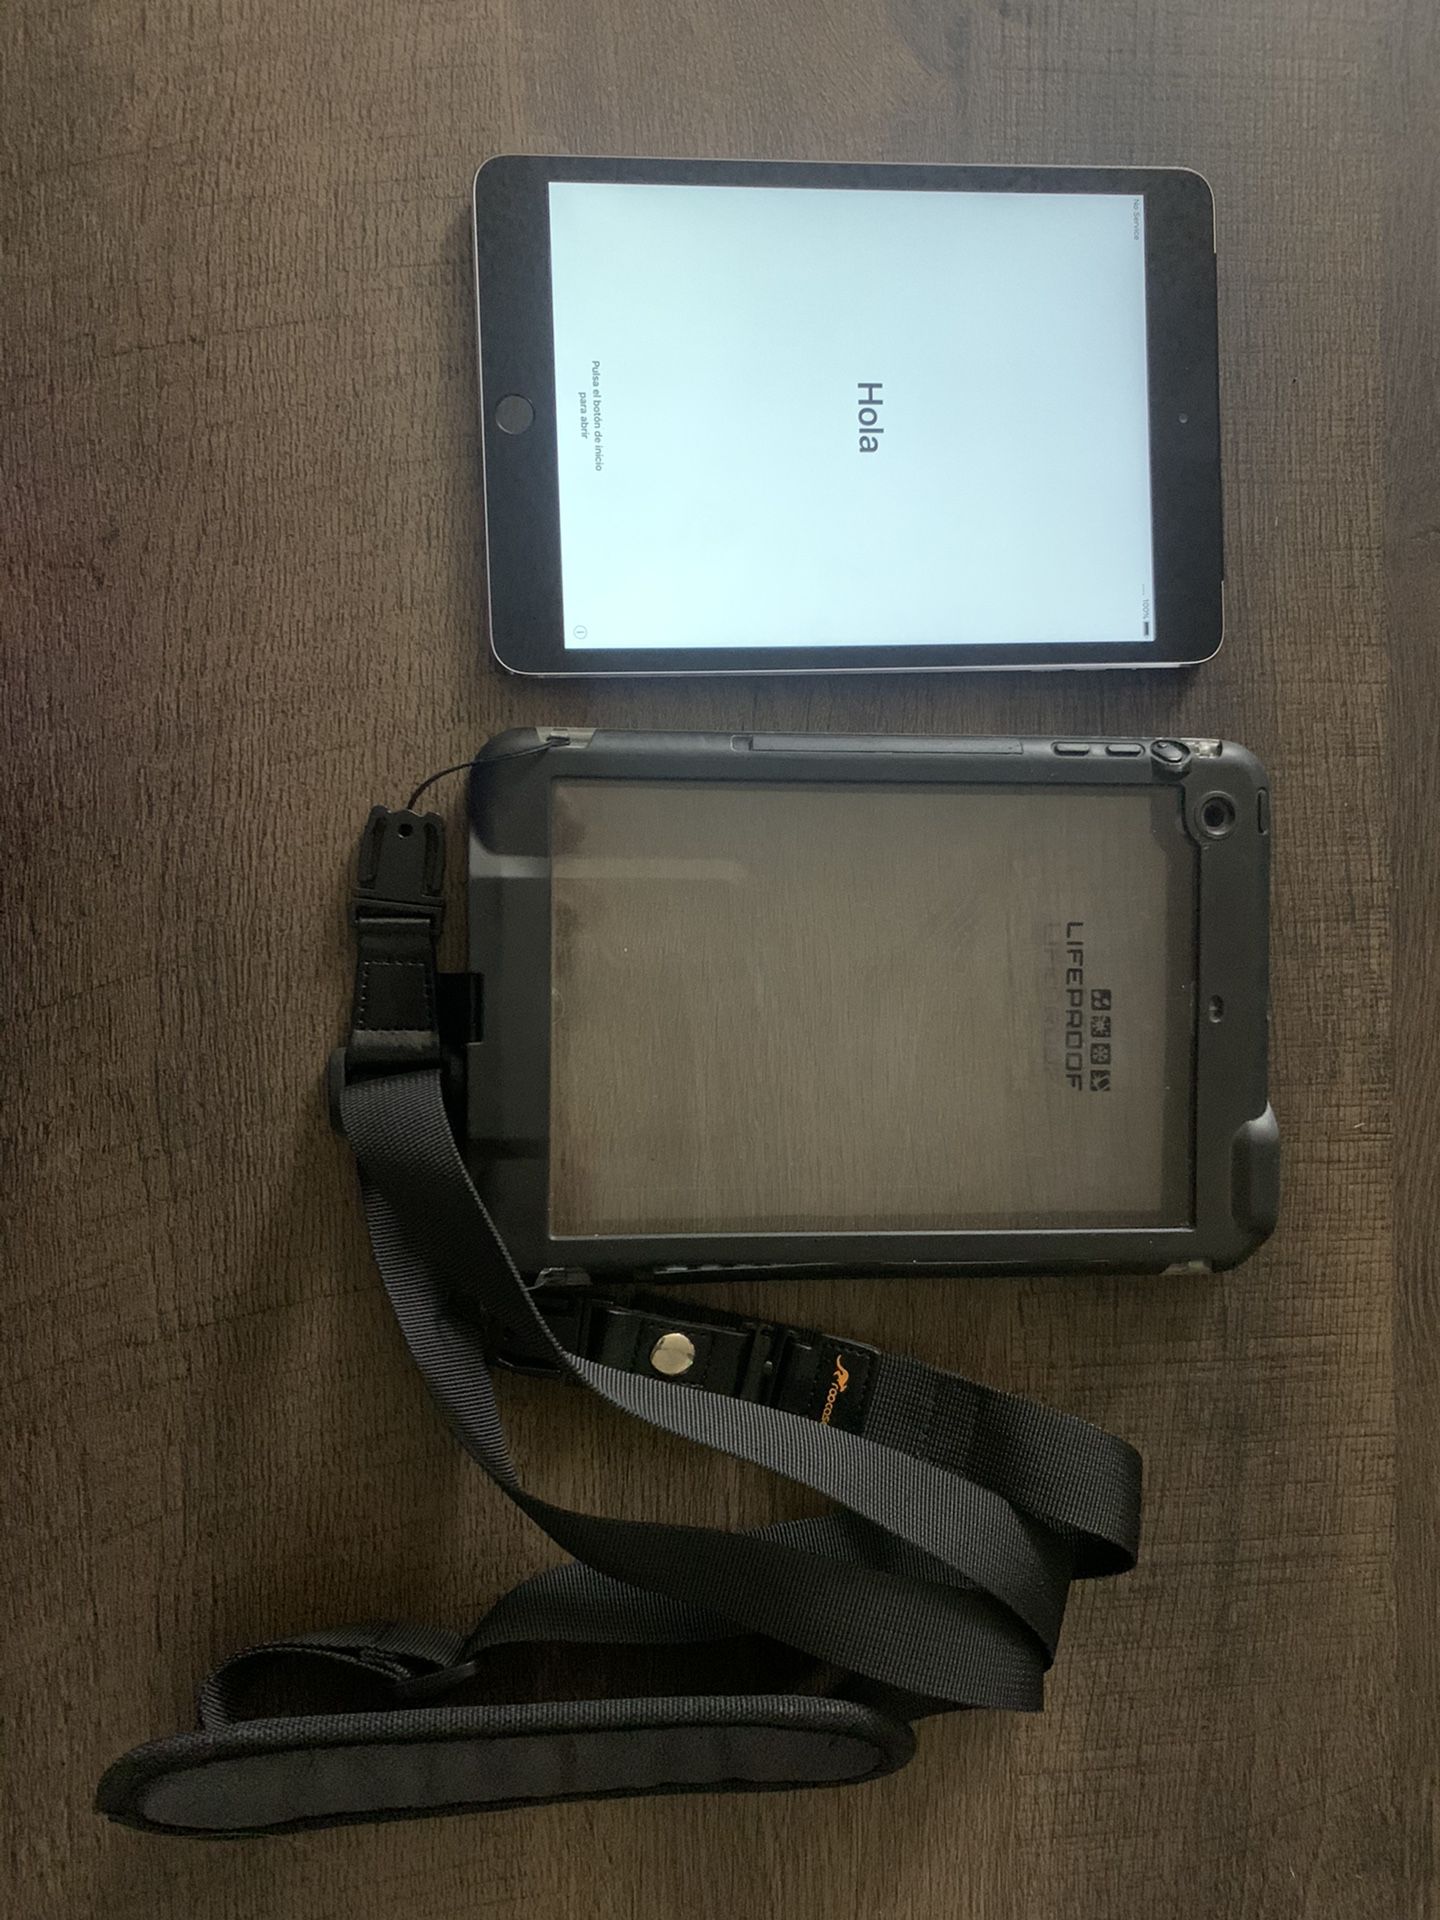 Ipad Mini 3 with Lifeproof Lanyard Case